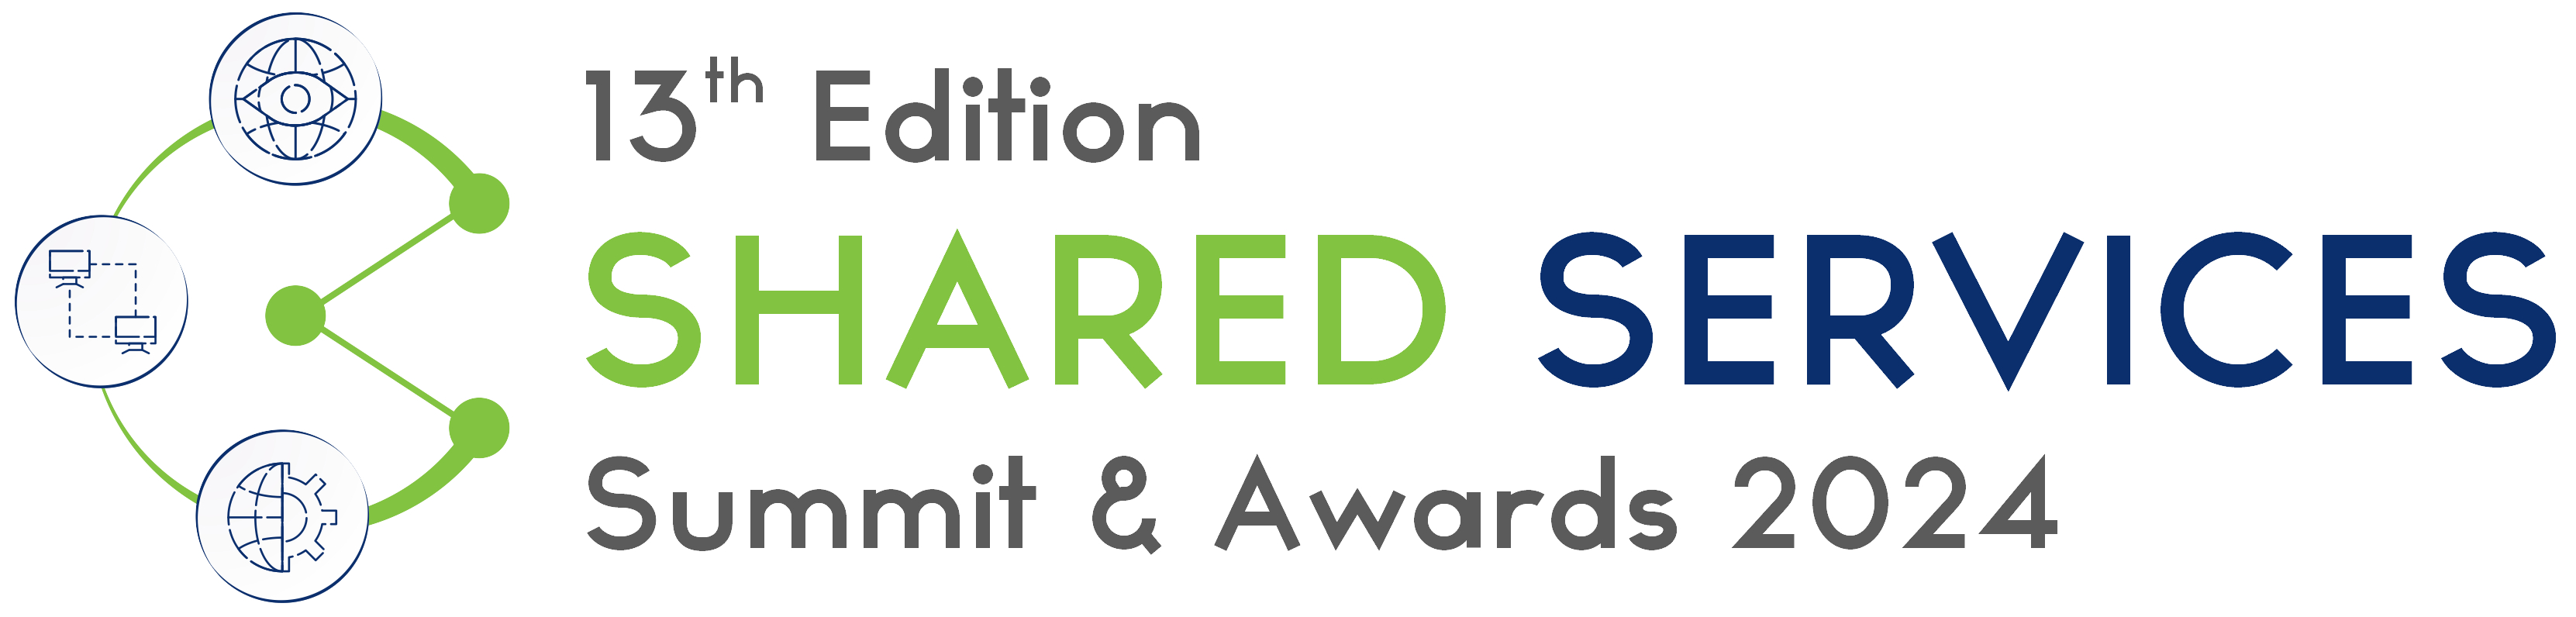 13th Edition Shared Service Summit & Awards 2024